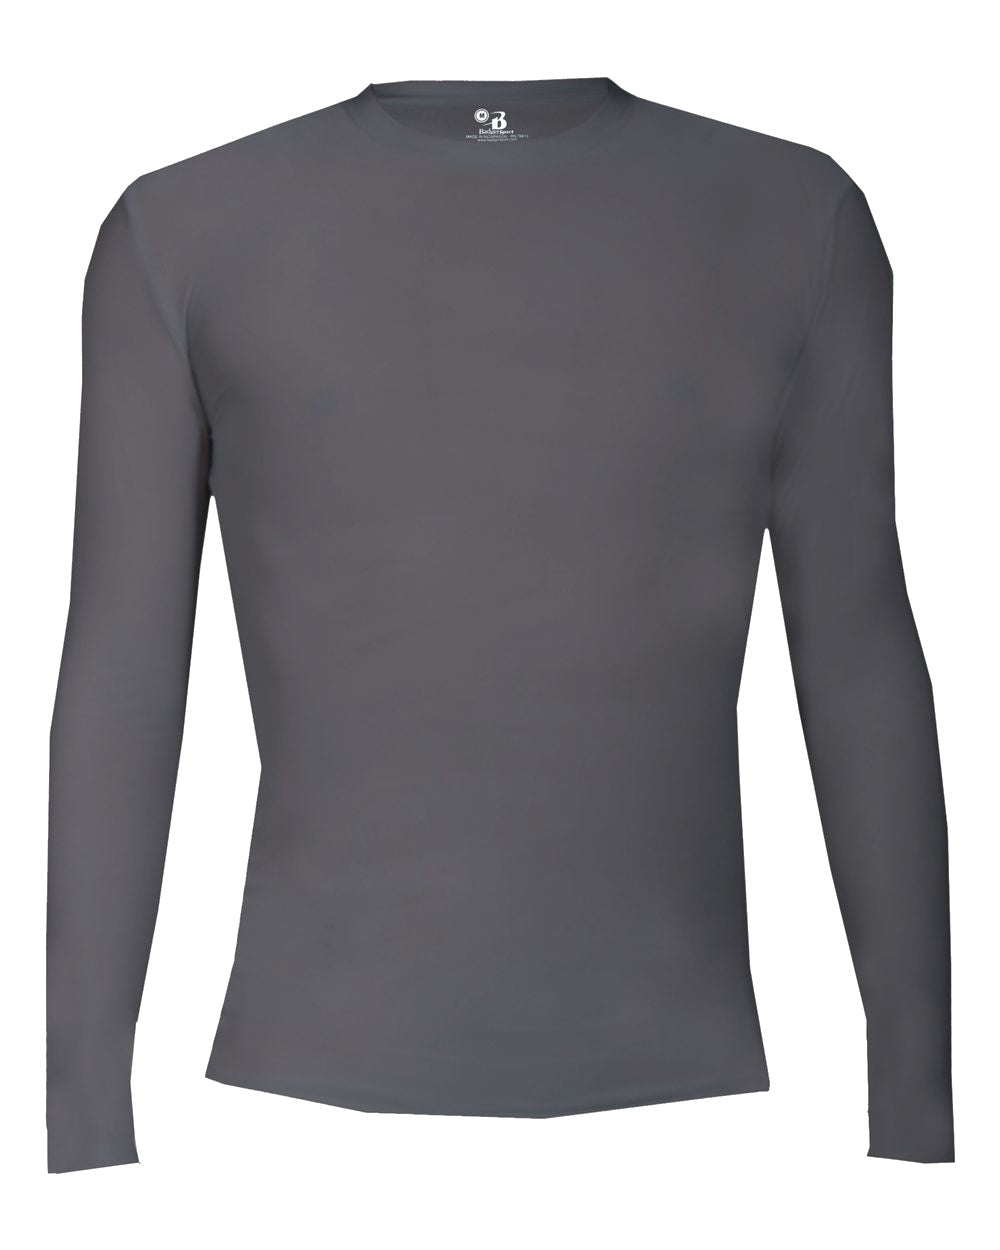 Long Sleeve Shirt - Pro Compression - Undershirt